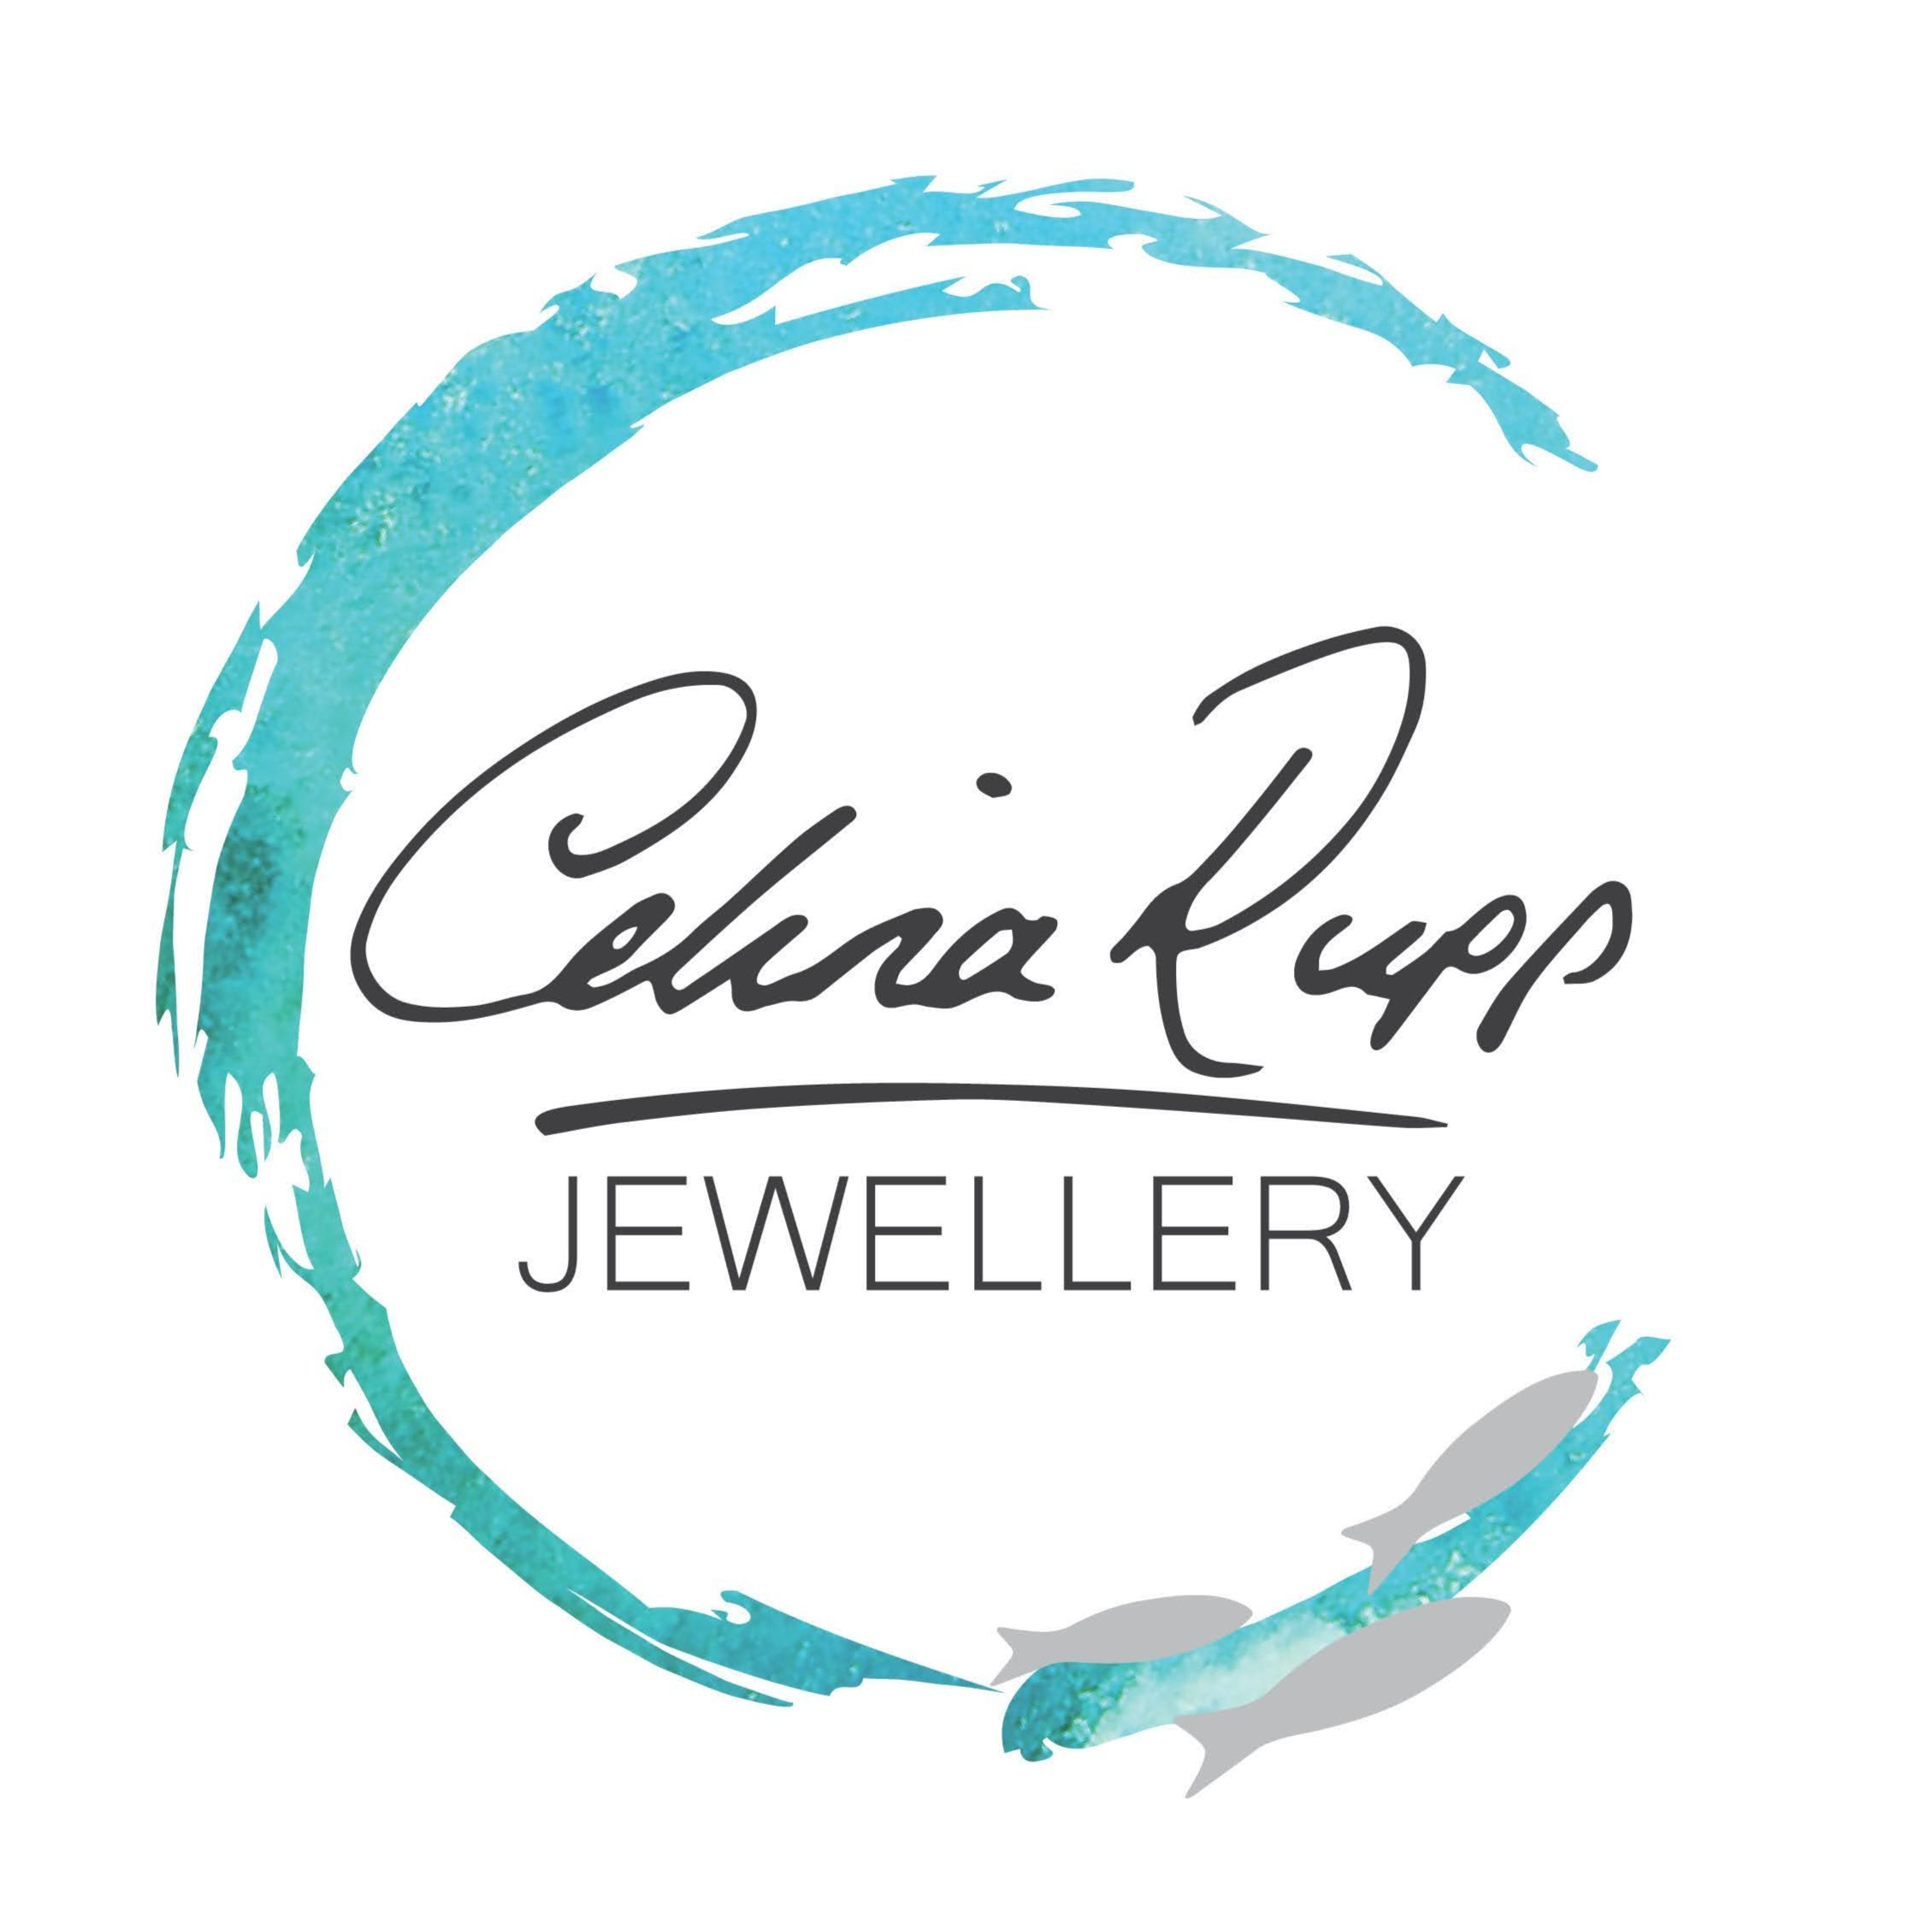 Celina Rupp Jewellery Logo